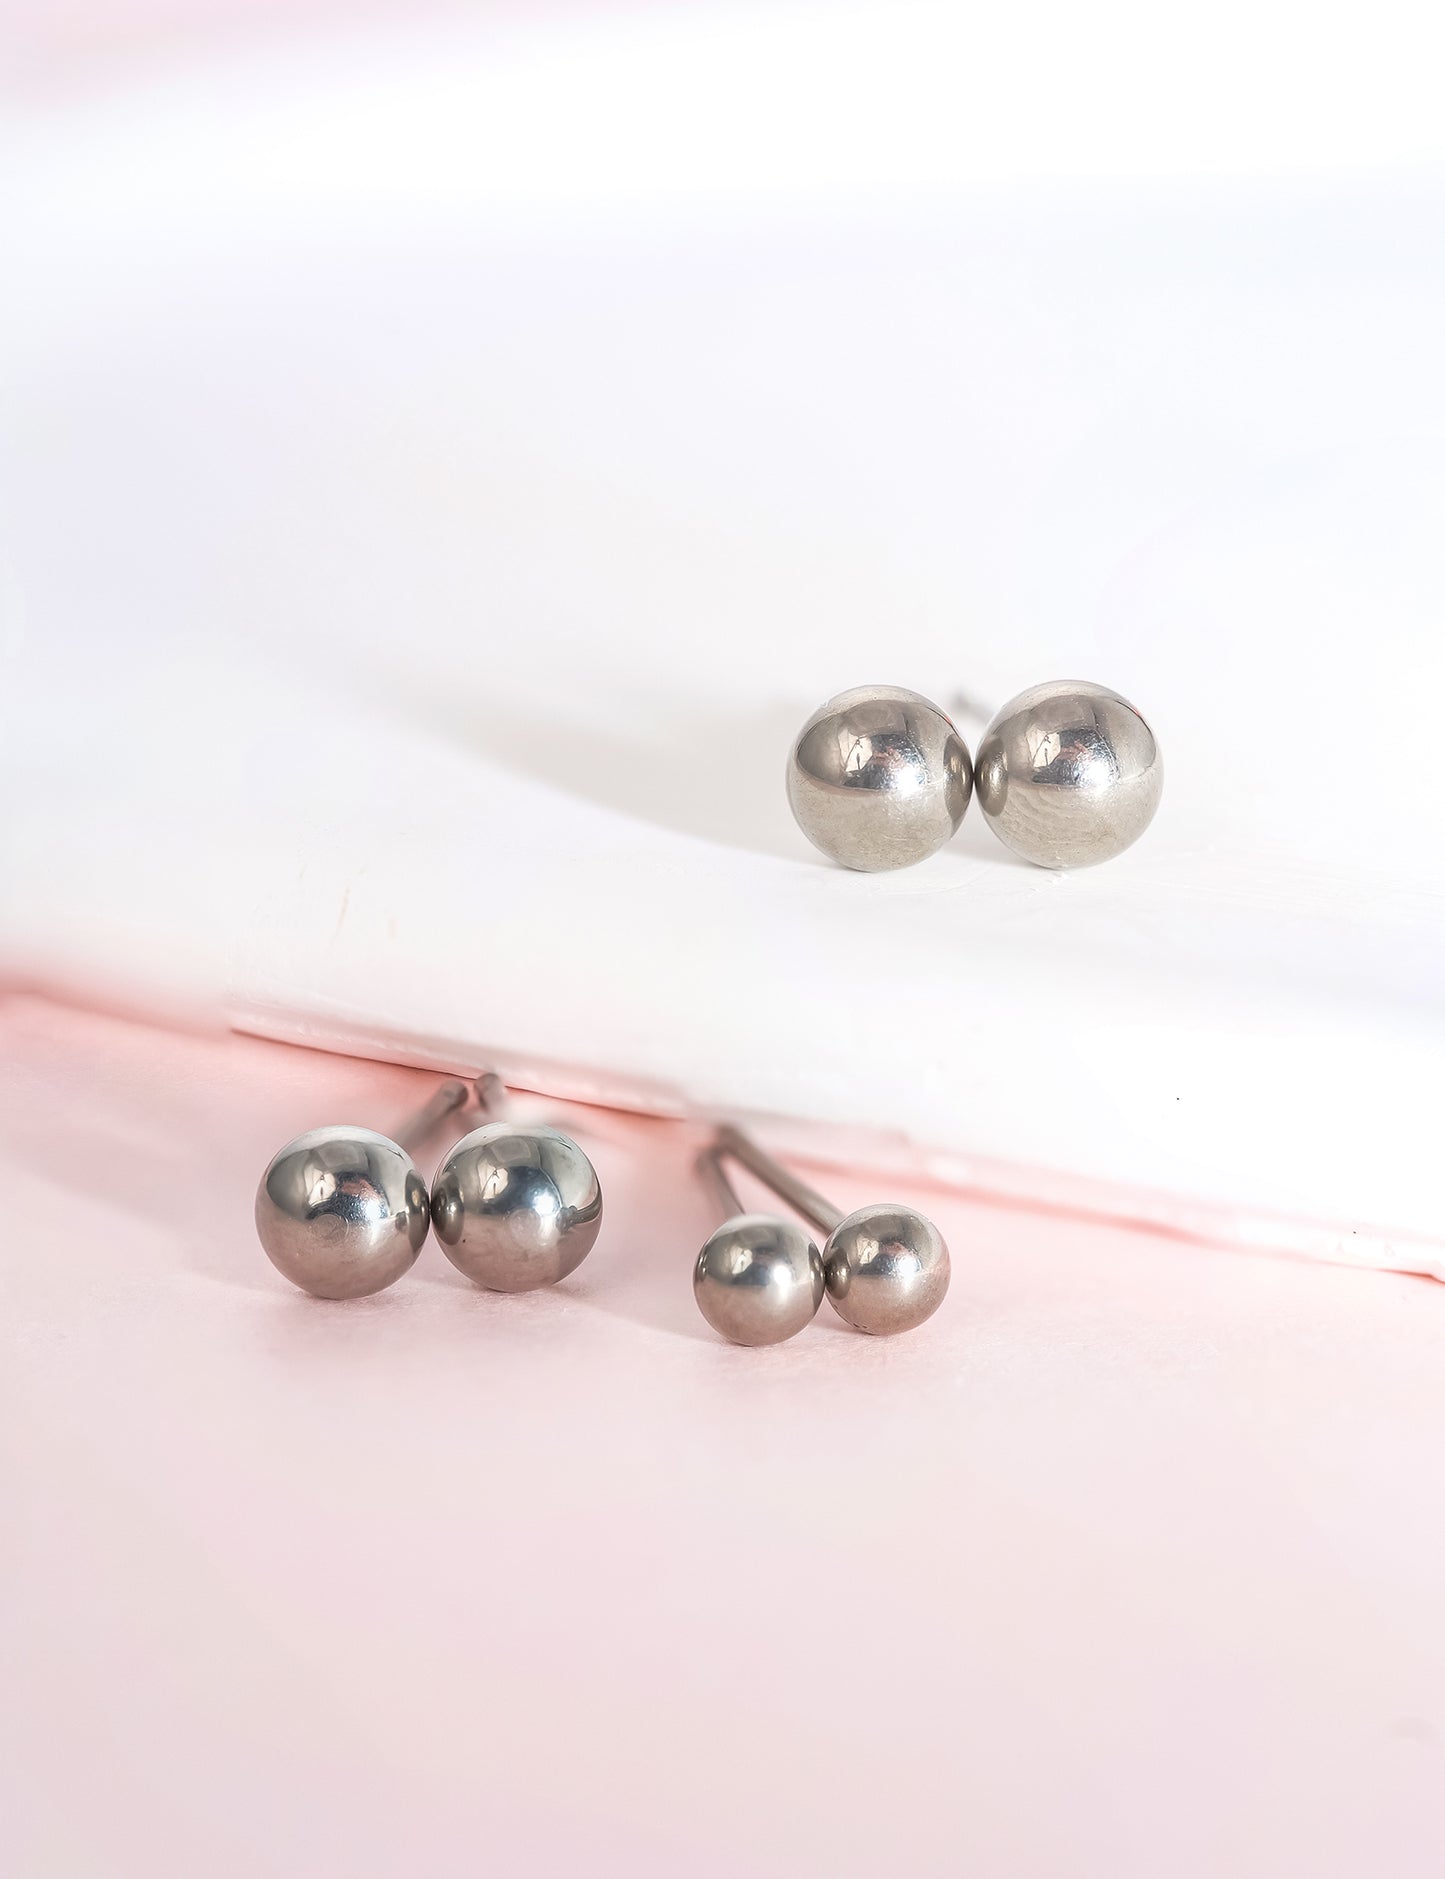 G23 Titanium Earrings Studs, Hypoallergenic Stud Earrings for Women Girls Men Sensitive Ears, Ball , Premium High Polished with Pure Titanium Backs